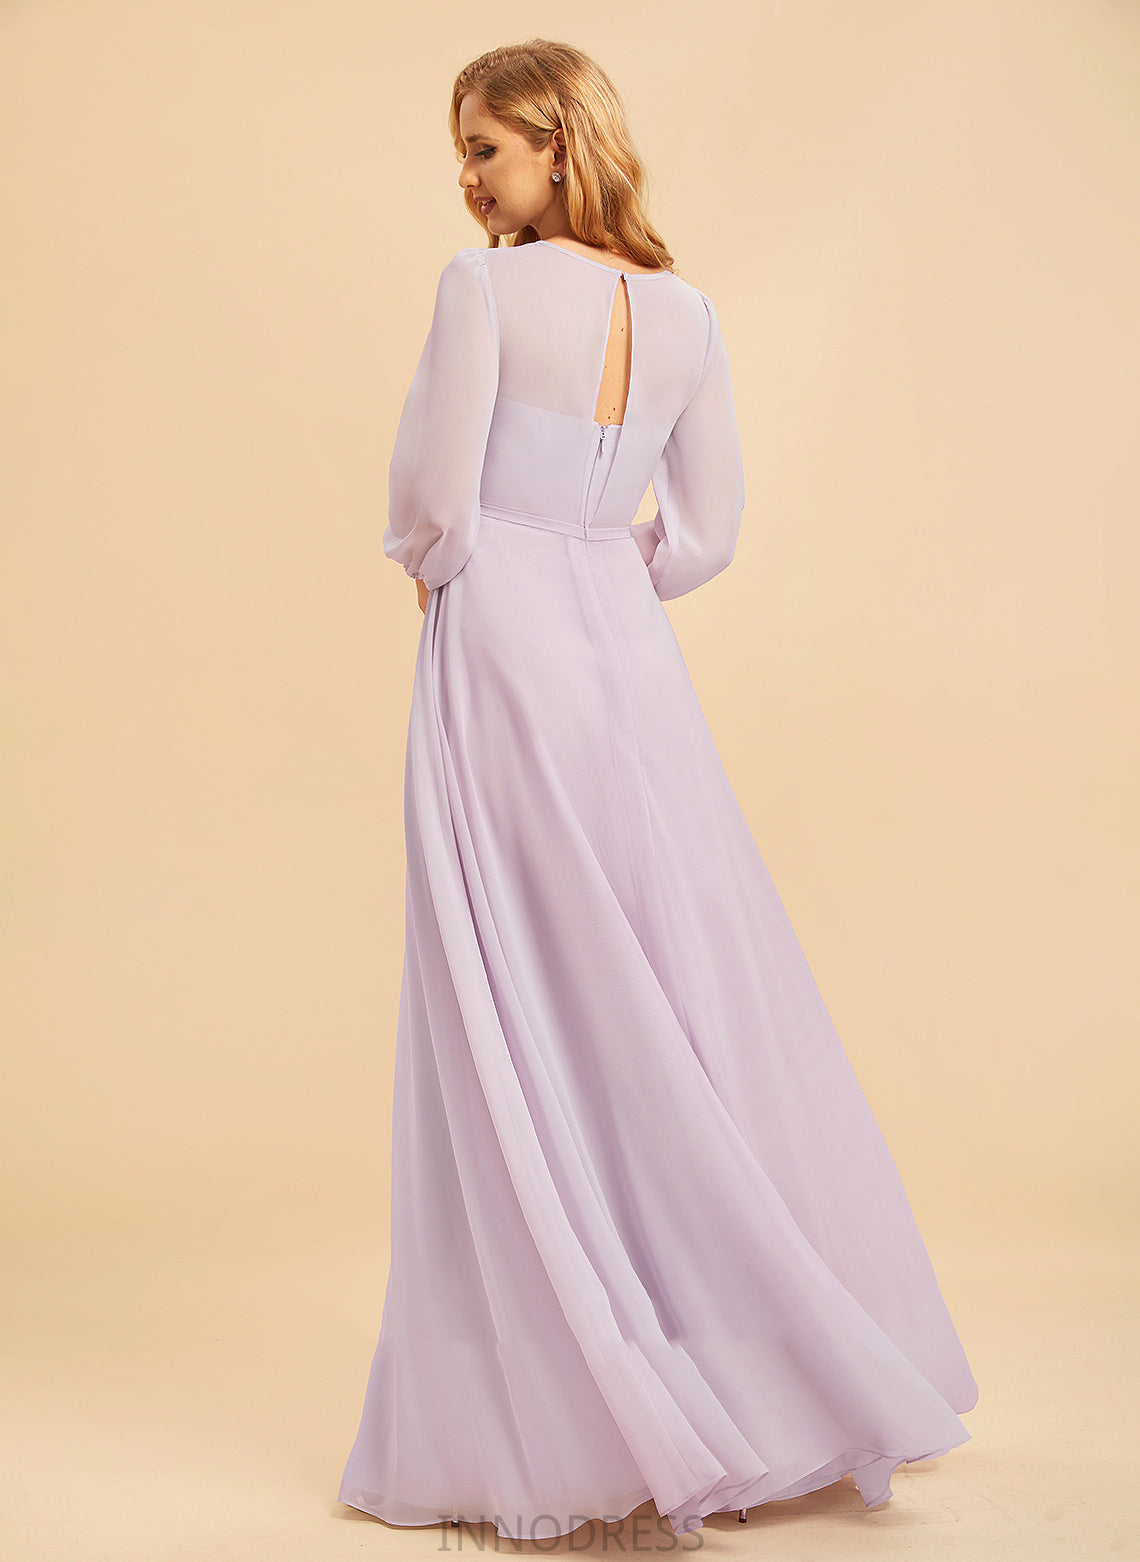 A-Line Fabric Silhouette Embellishment Bow(s) ScoopNeck Neckline Length Floor-Length Ashtyn Sleeveless Natural Waist Bridesmaid Dresses